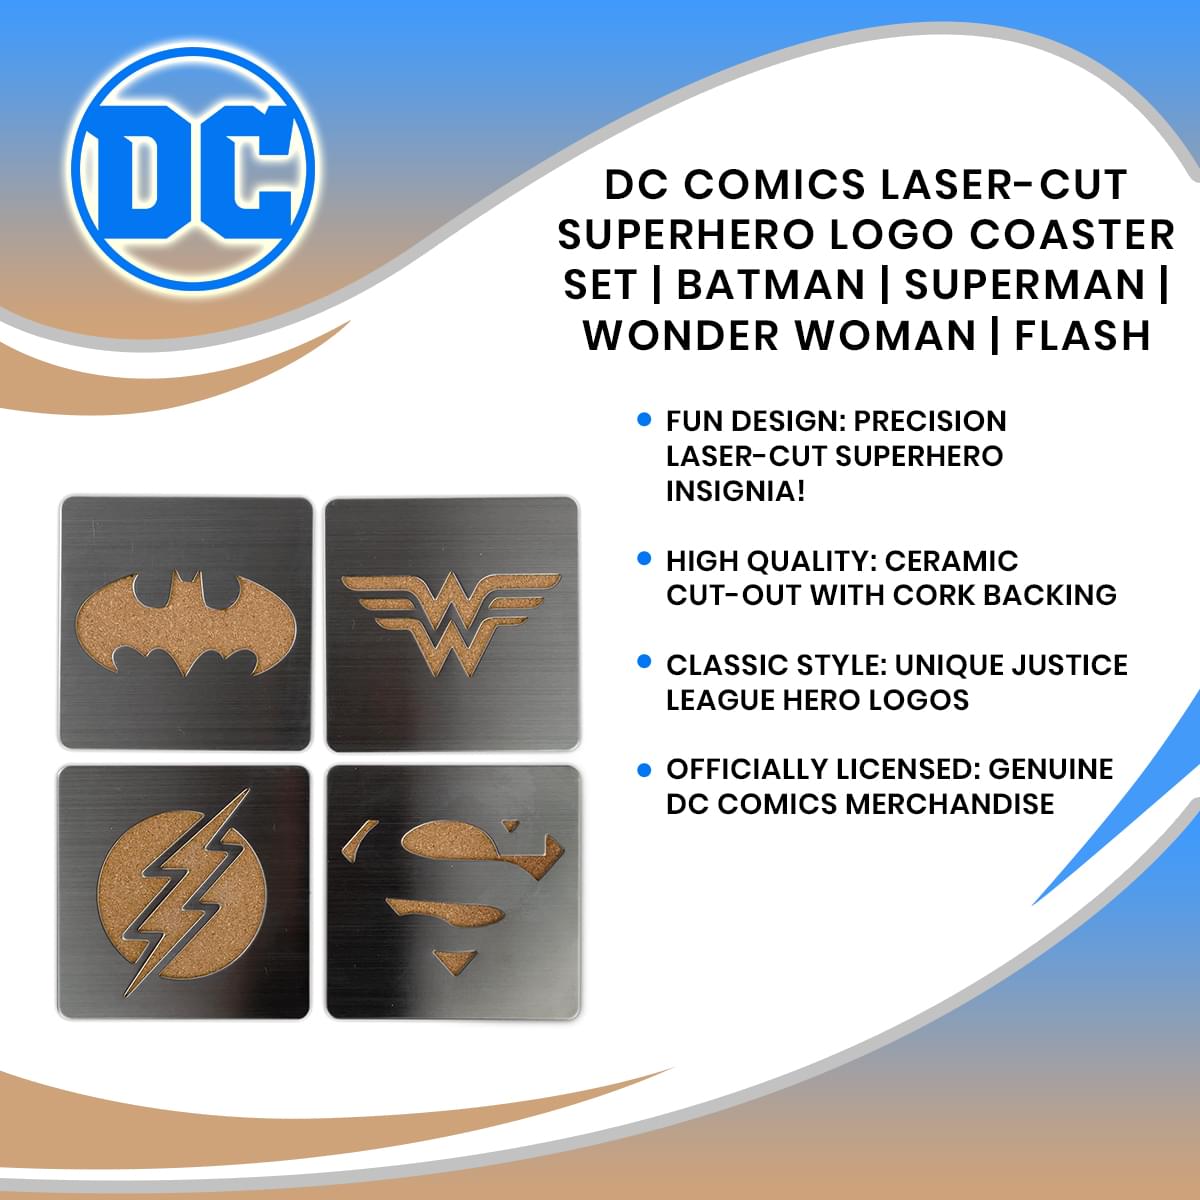 DC Comics Laser-Cut Superhero Logo Coaster Set | Batman | Superman | Wonder Woman | Flash